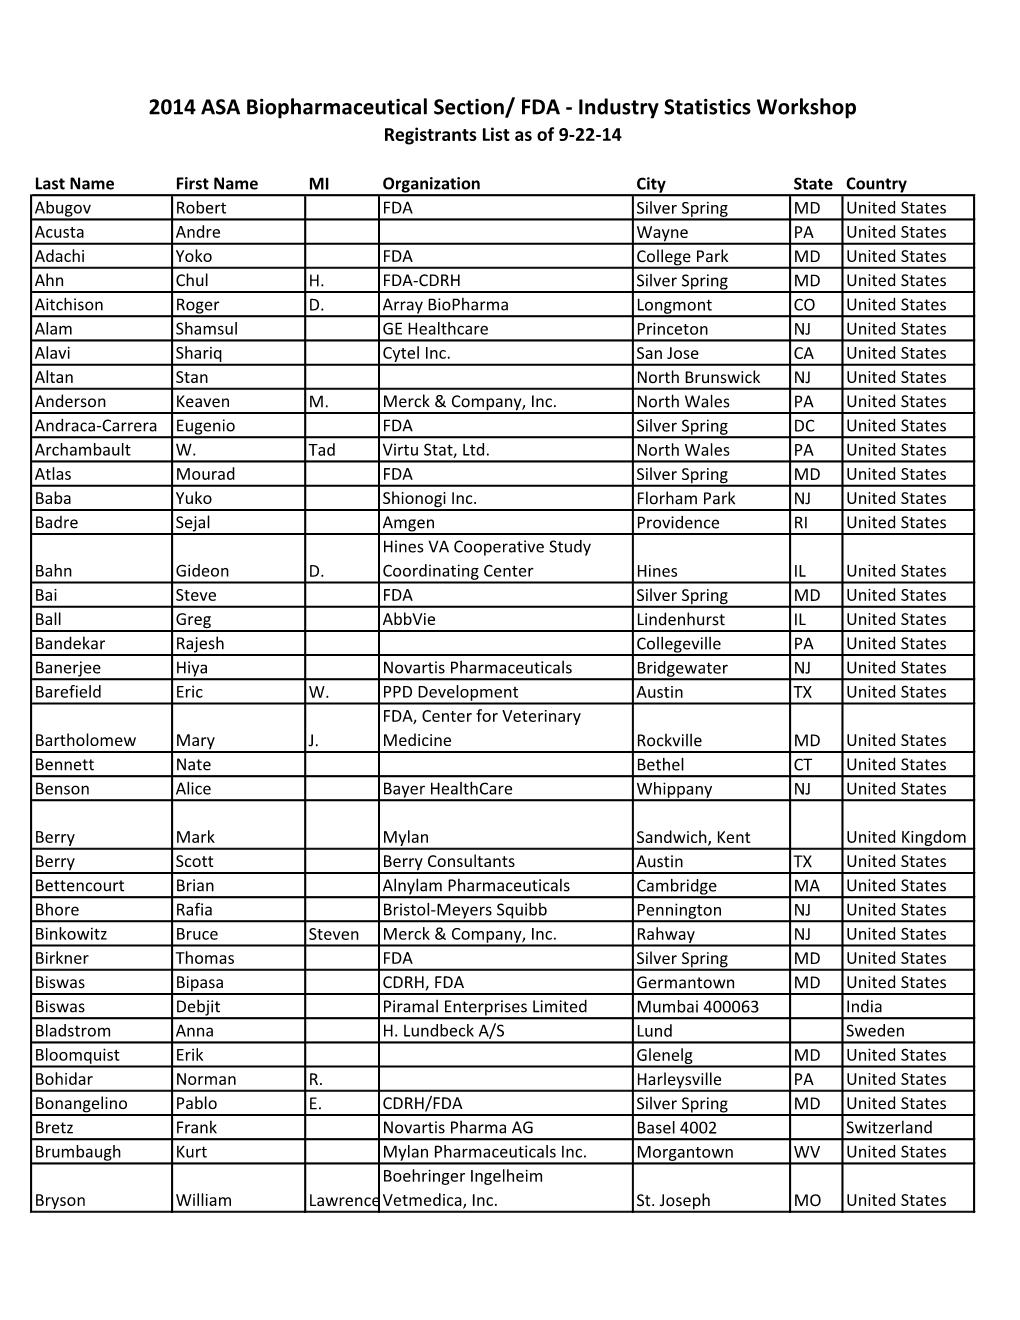 FDA - Industry Statistics Workshop Registrants List As of 9-22-14